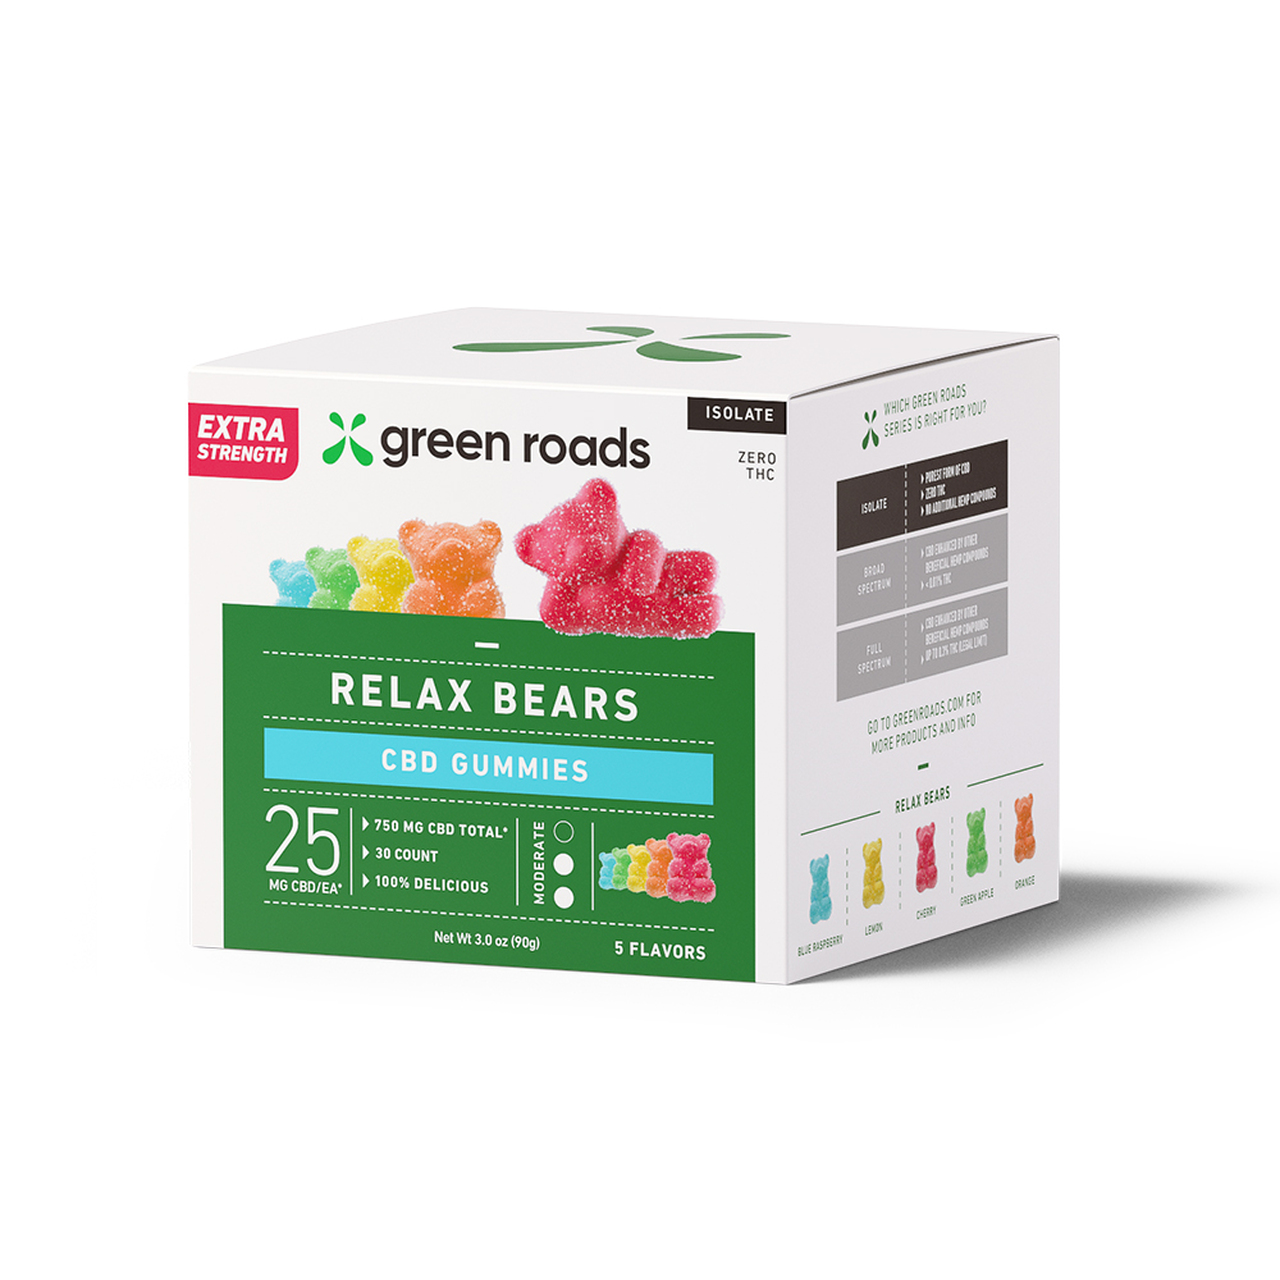 Green Roads, Extra Strength CBD Relax Bears Gummies, Isolate THC-Free, 30ct, 750mg CBD 1